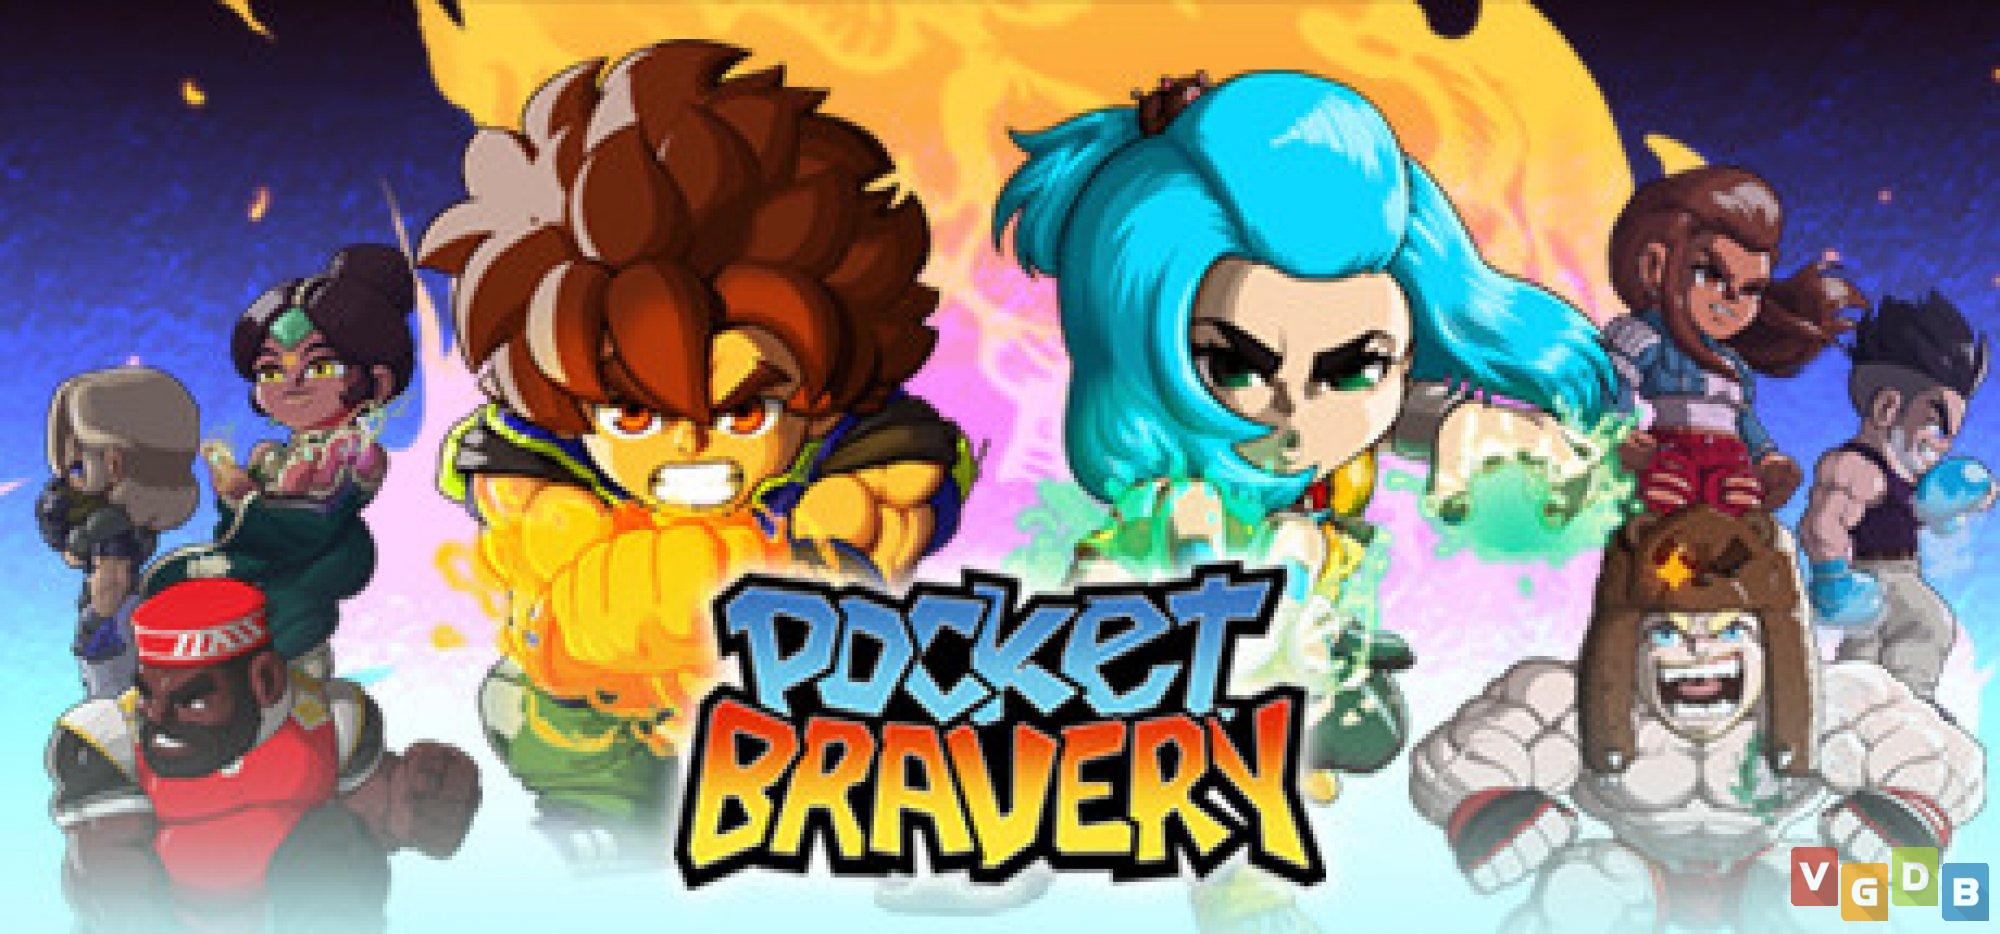 Pocket Bravery : Jogo de Luta BR - Demo Gameplay (PC)[2K] 